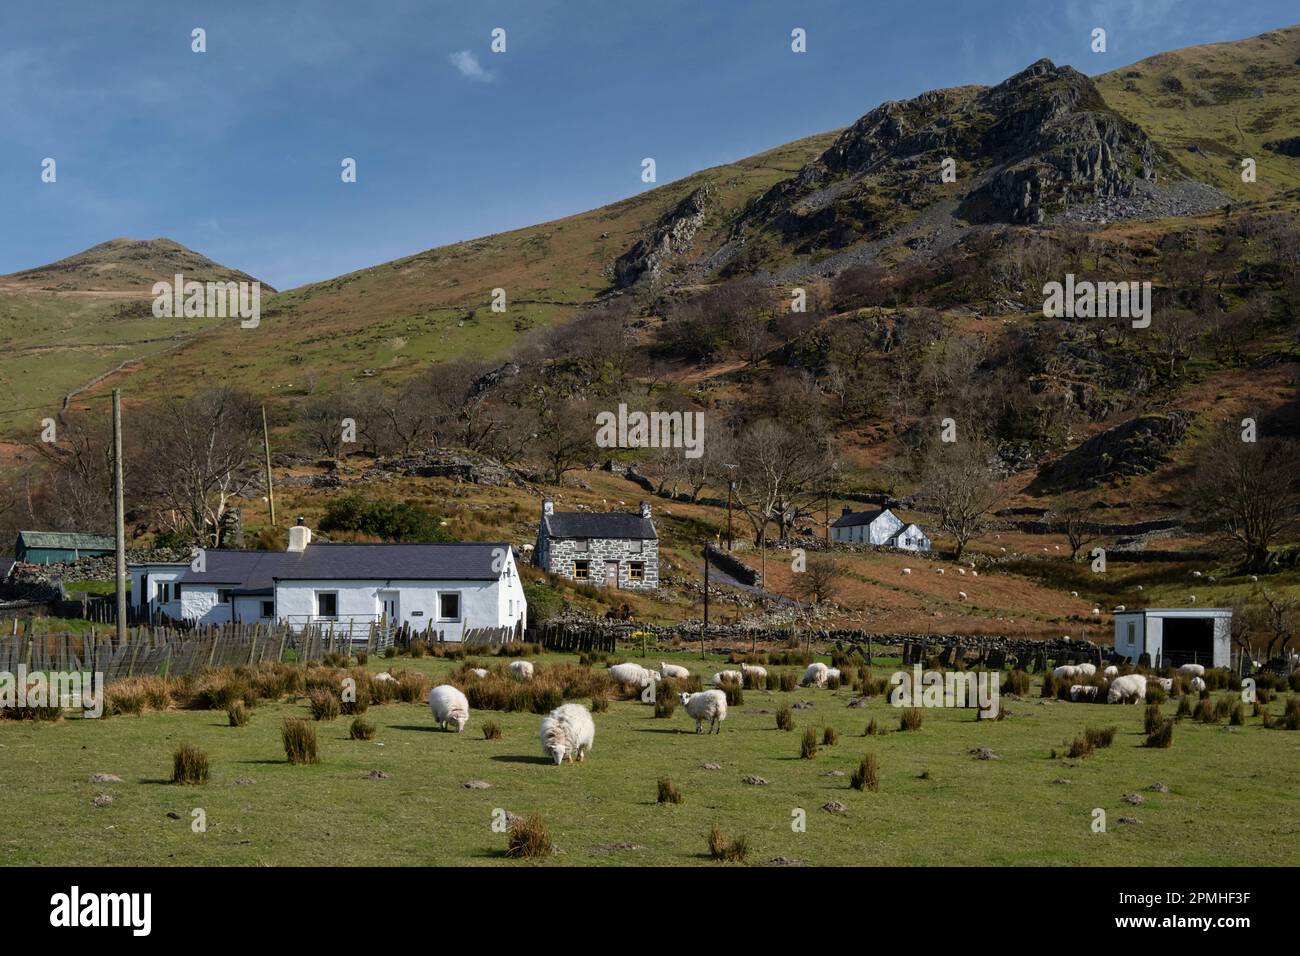 The Community and hamlet of Nant Peris, Llanberis Pass, Snowdonia National Park, Eryri, North Wales, United Kingdom, Europe Stock Photo